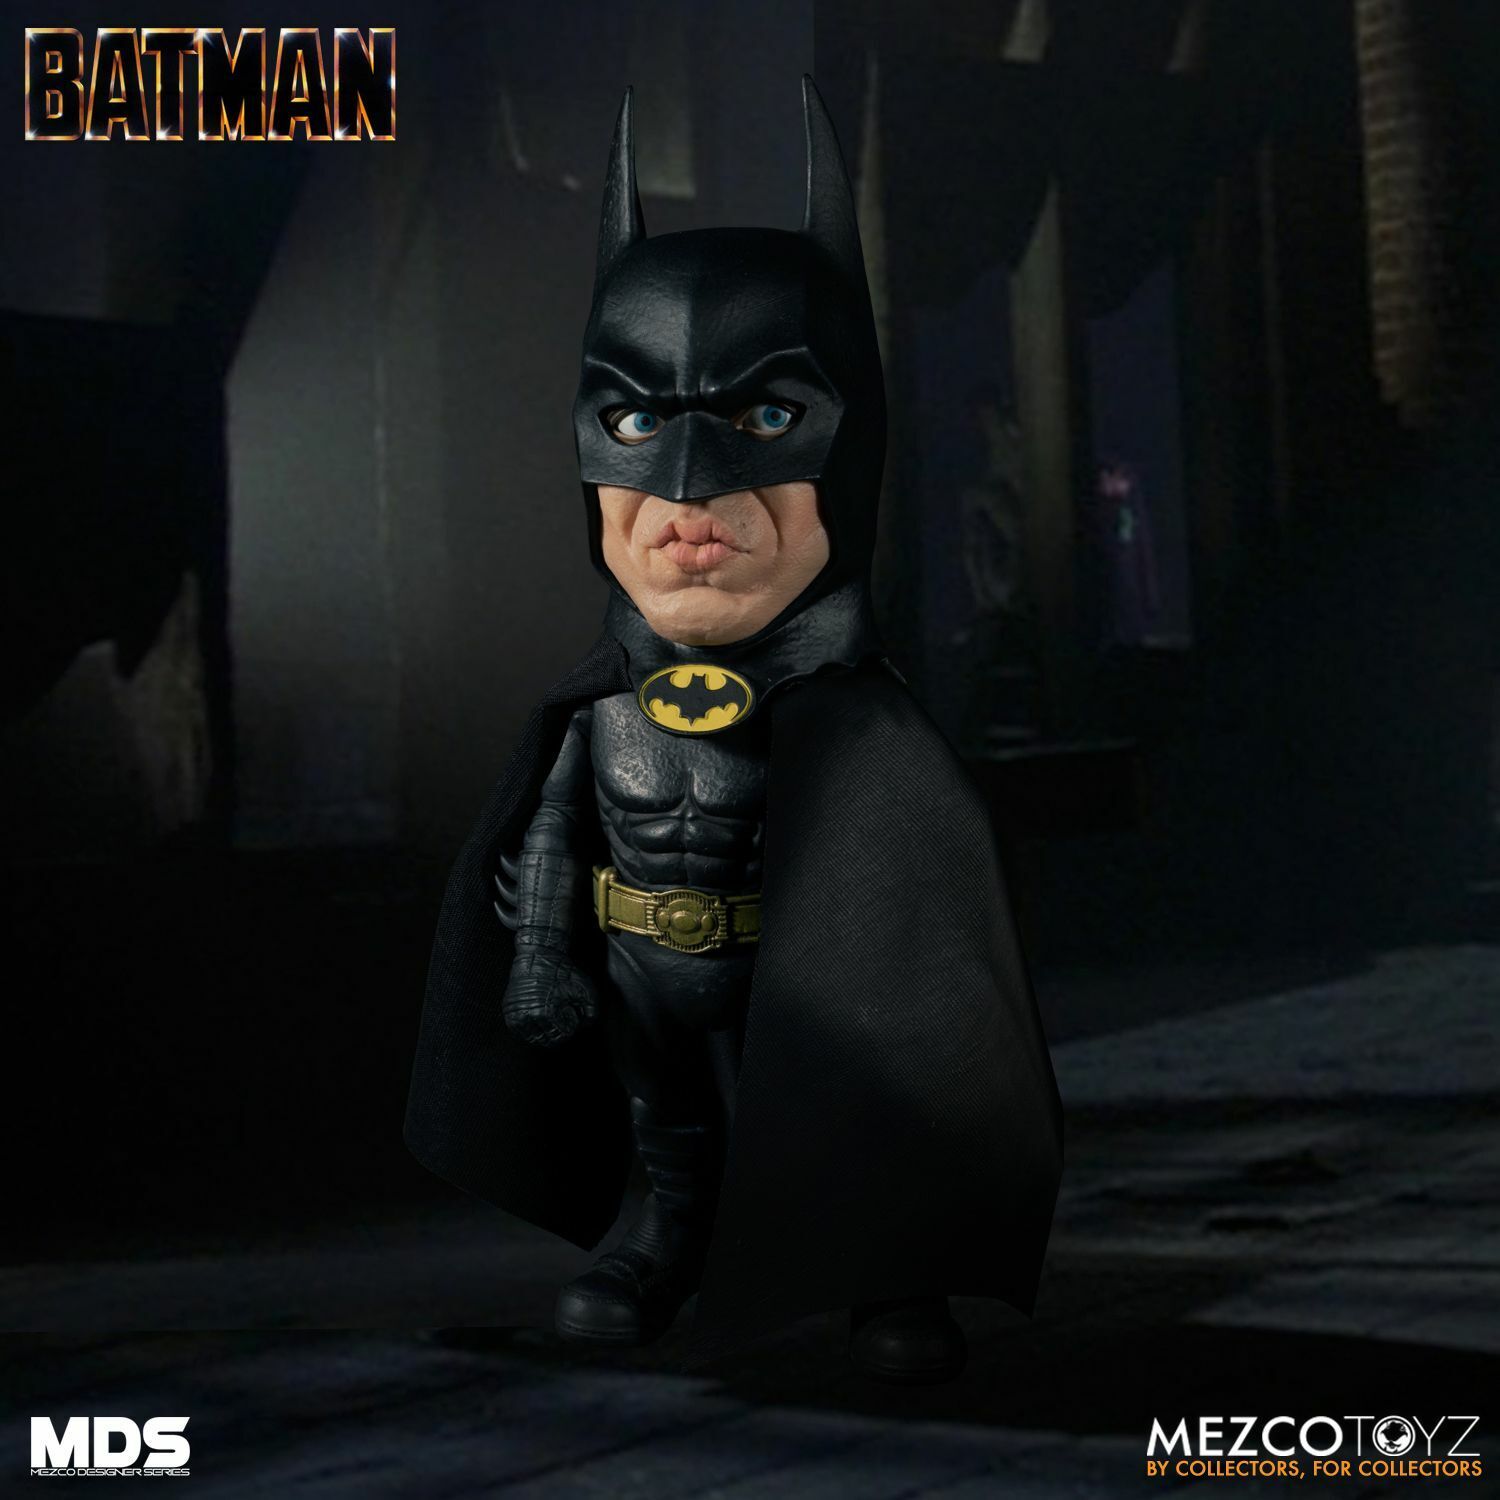 Mezco DC Comics Designer Series Batman 1989 Deluxe Figure - Michael Keaton